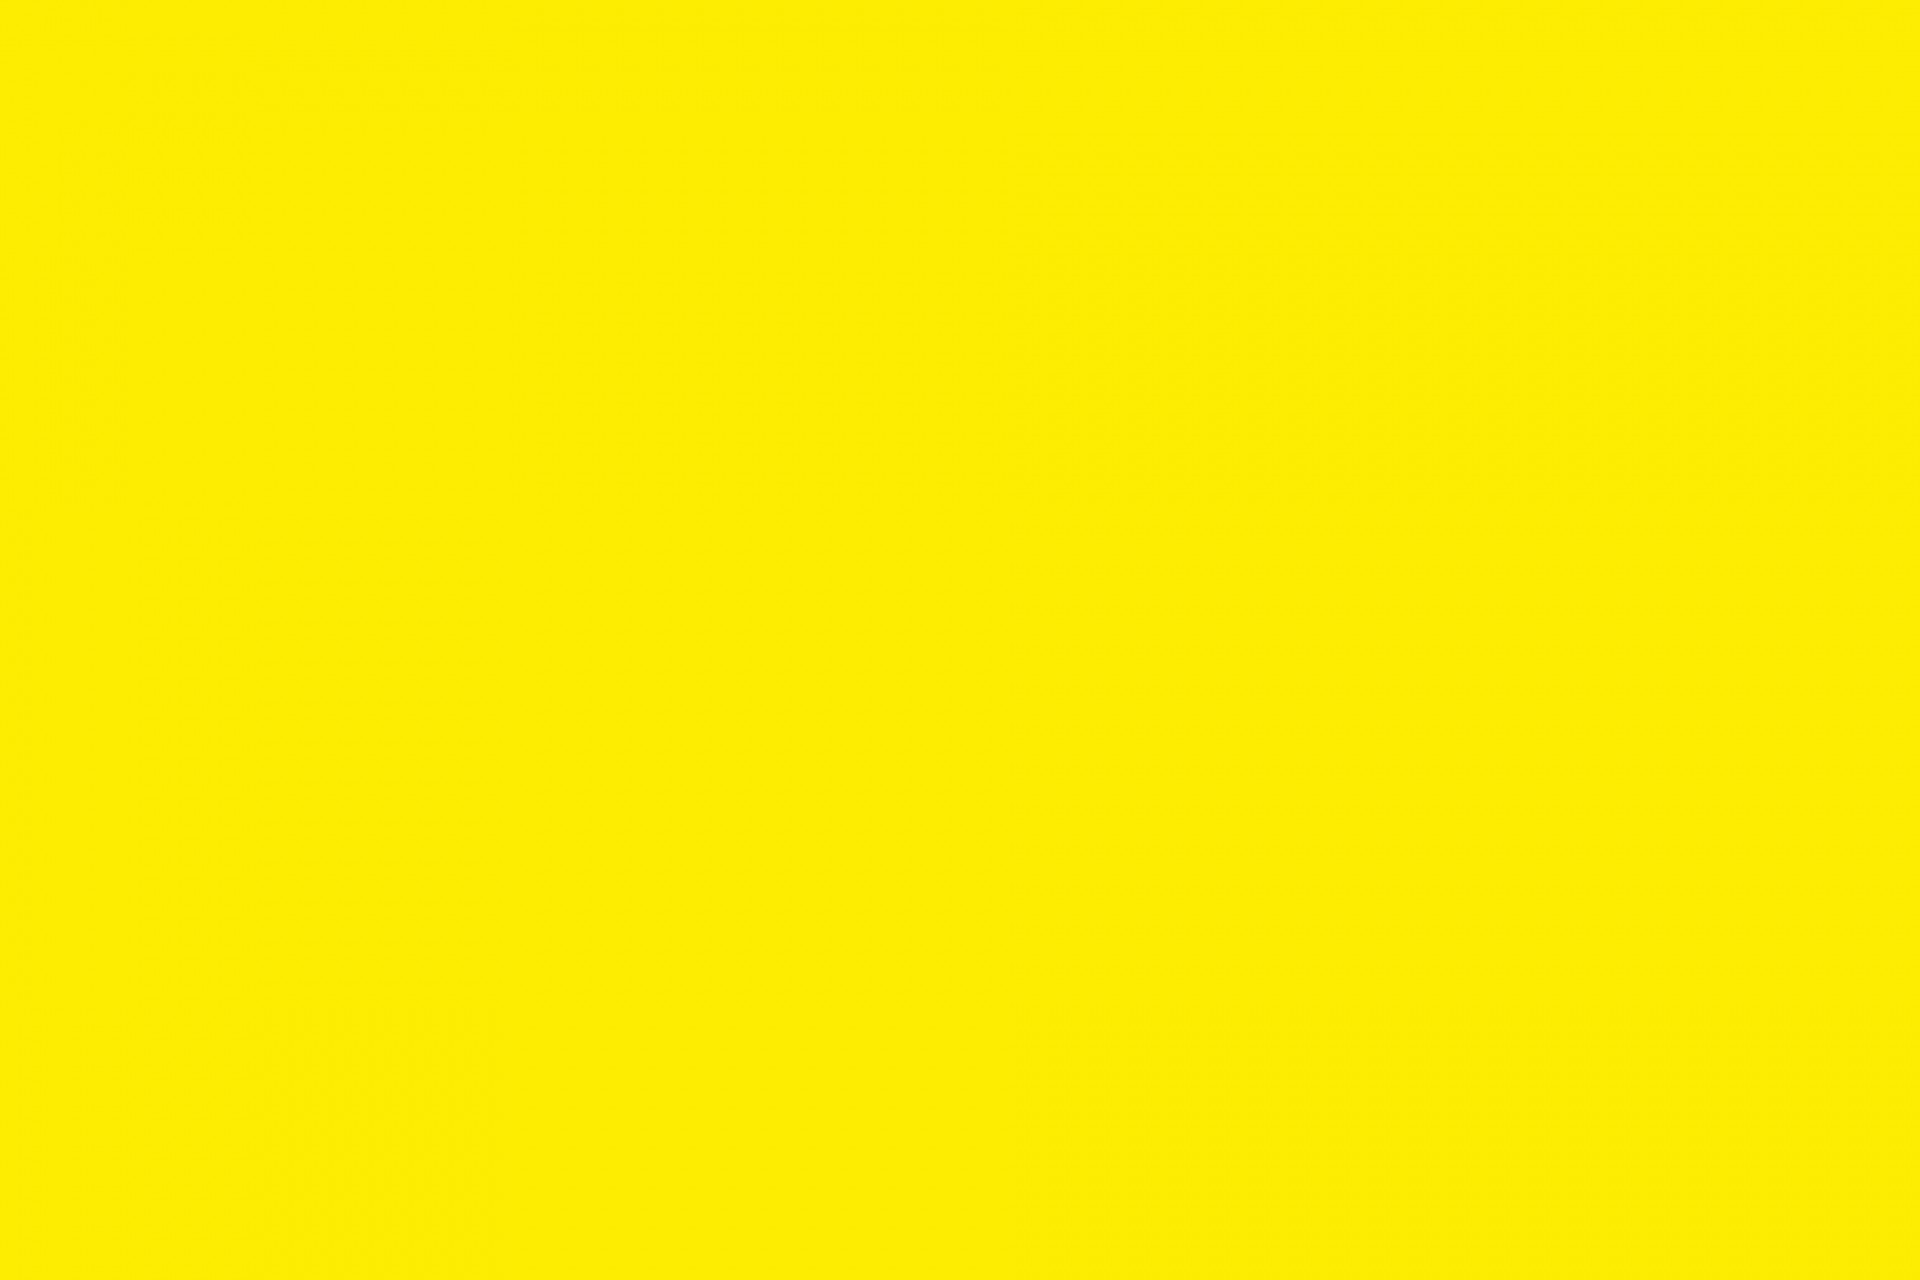 Primary Yellow Background